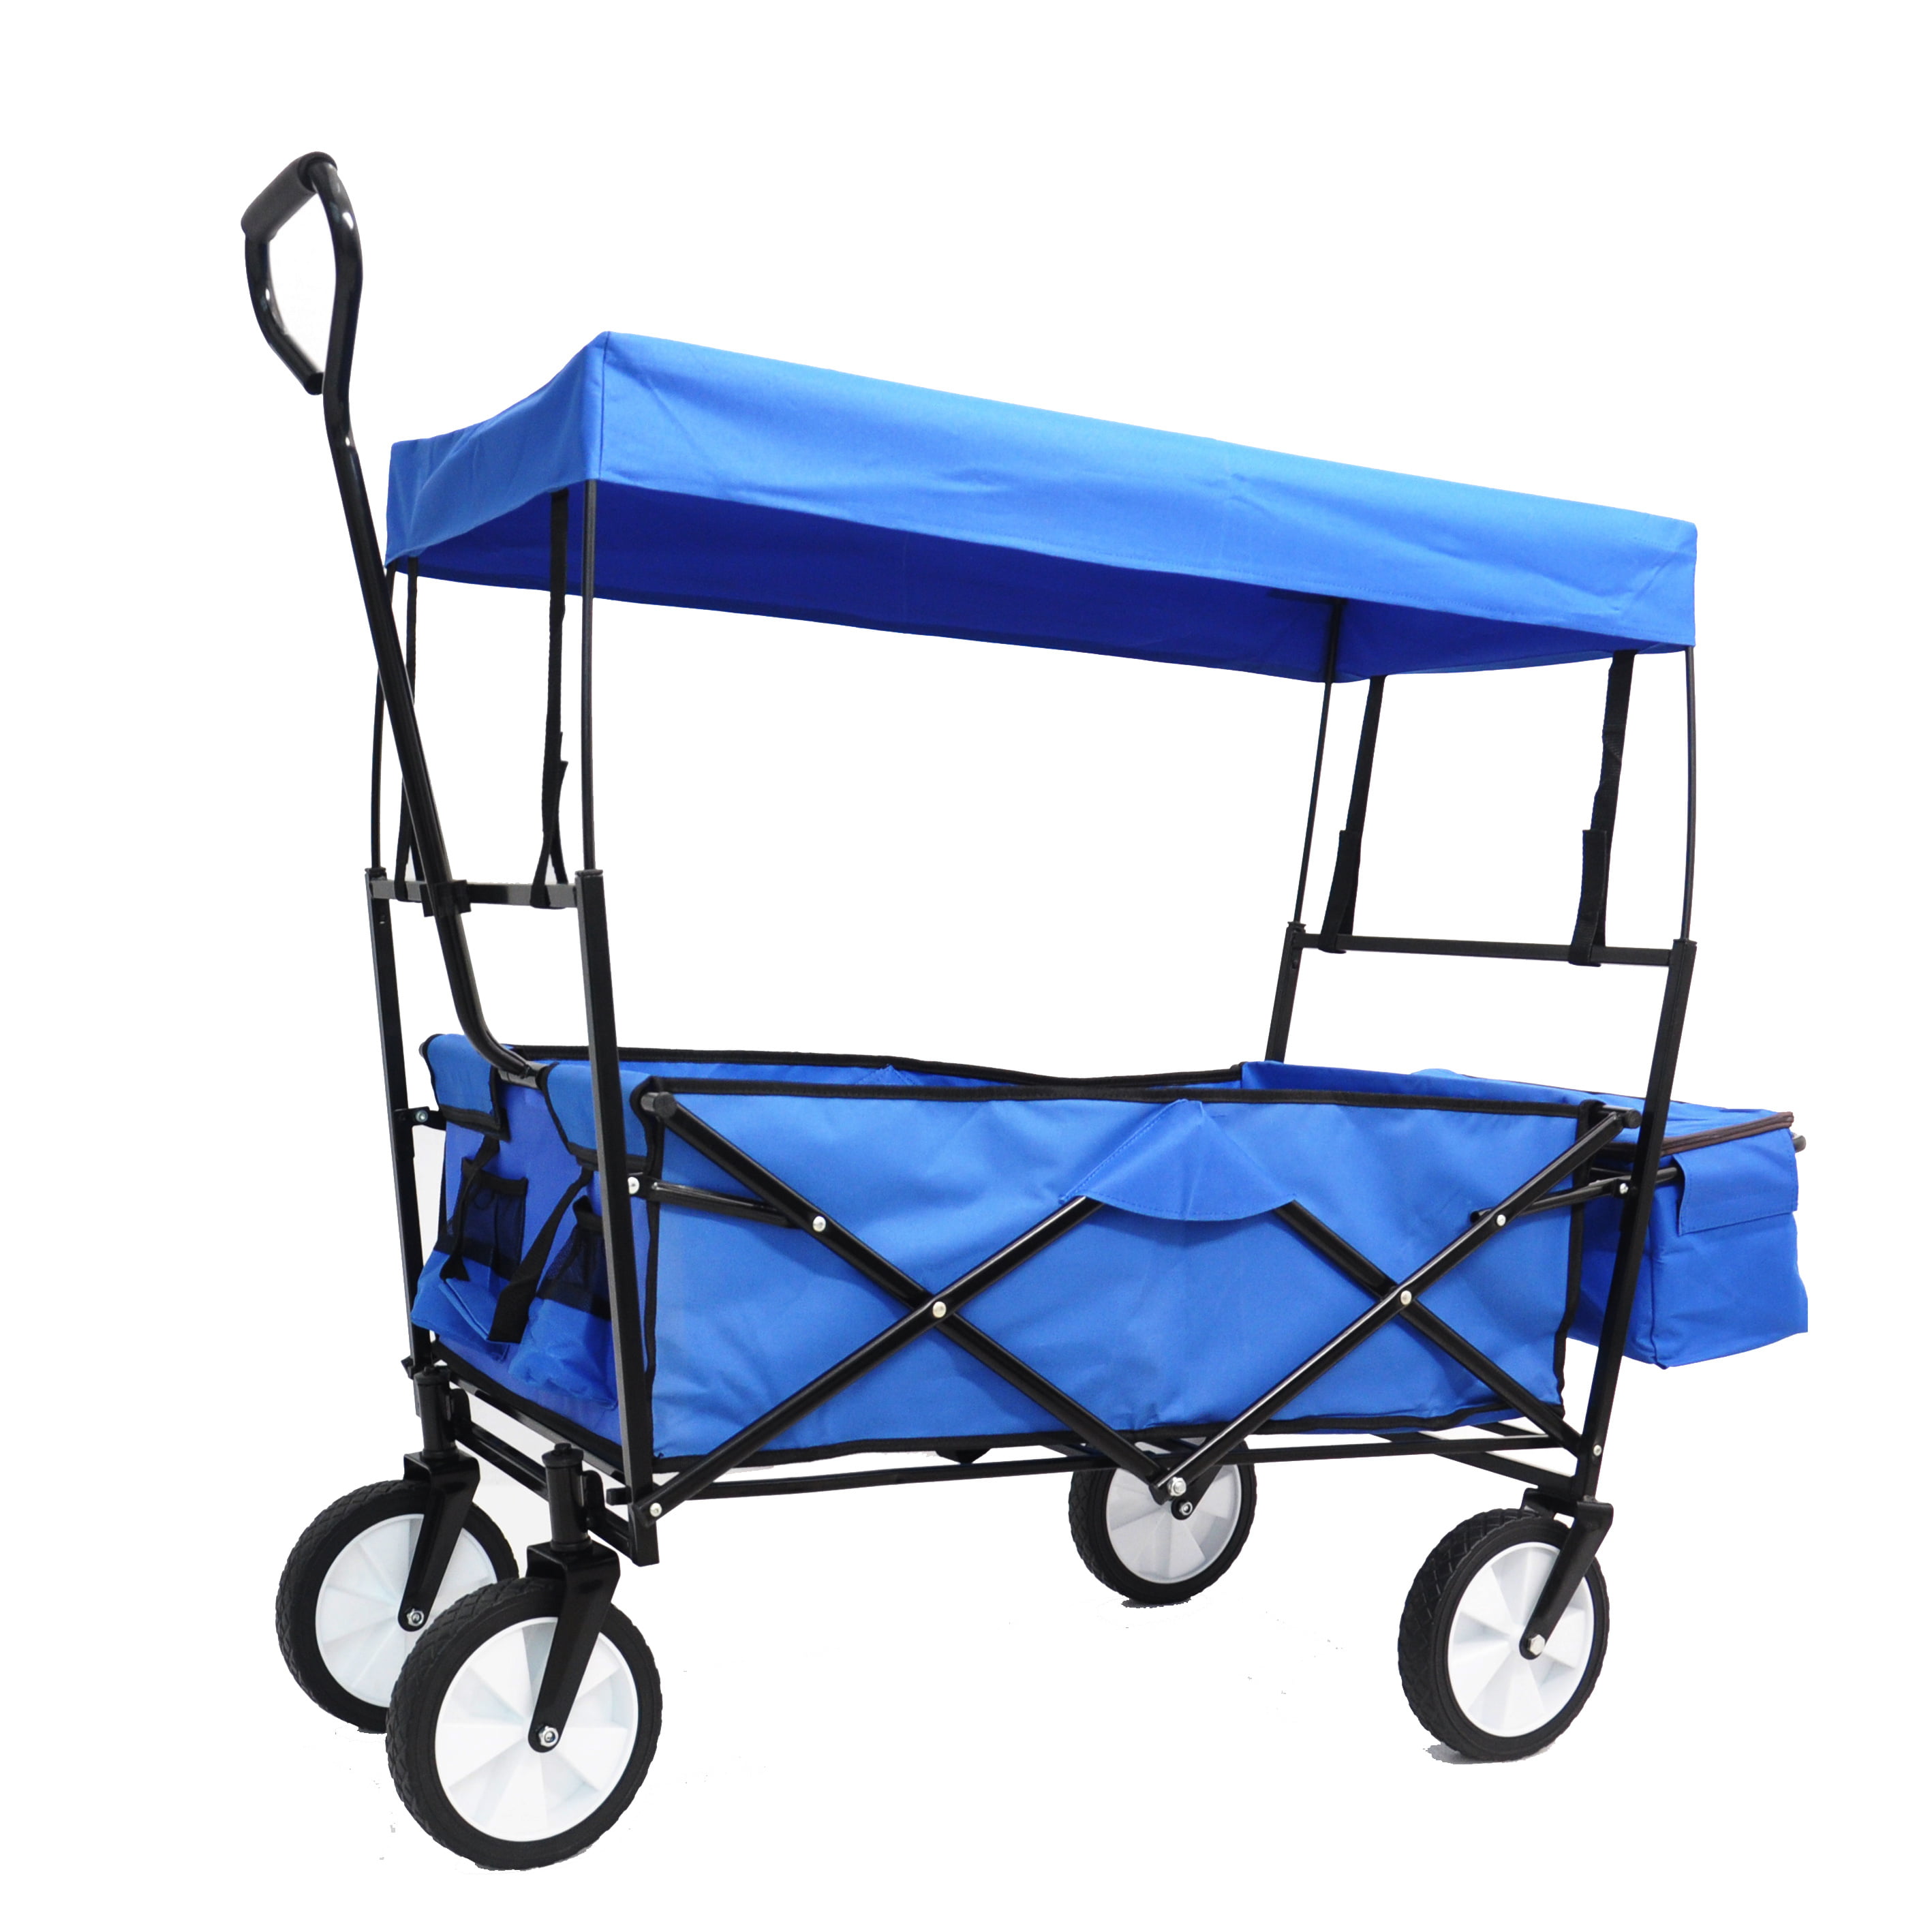 49.2" Aukfa Folding Utility Cargo Wagon Cart w/ Removable Canopy (Blue) $54.90 + Free Shipping